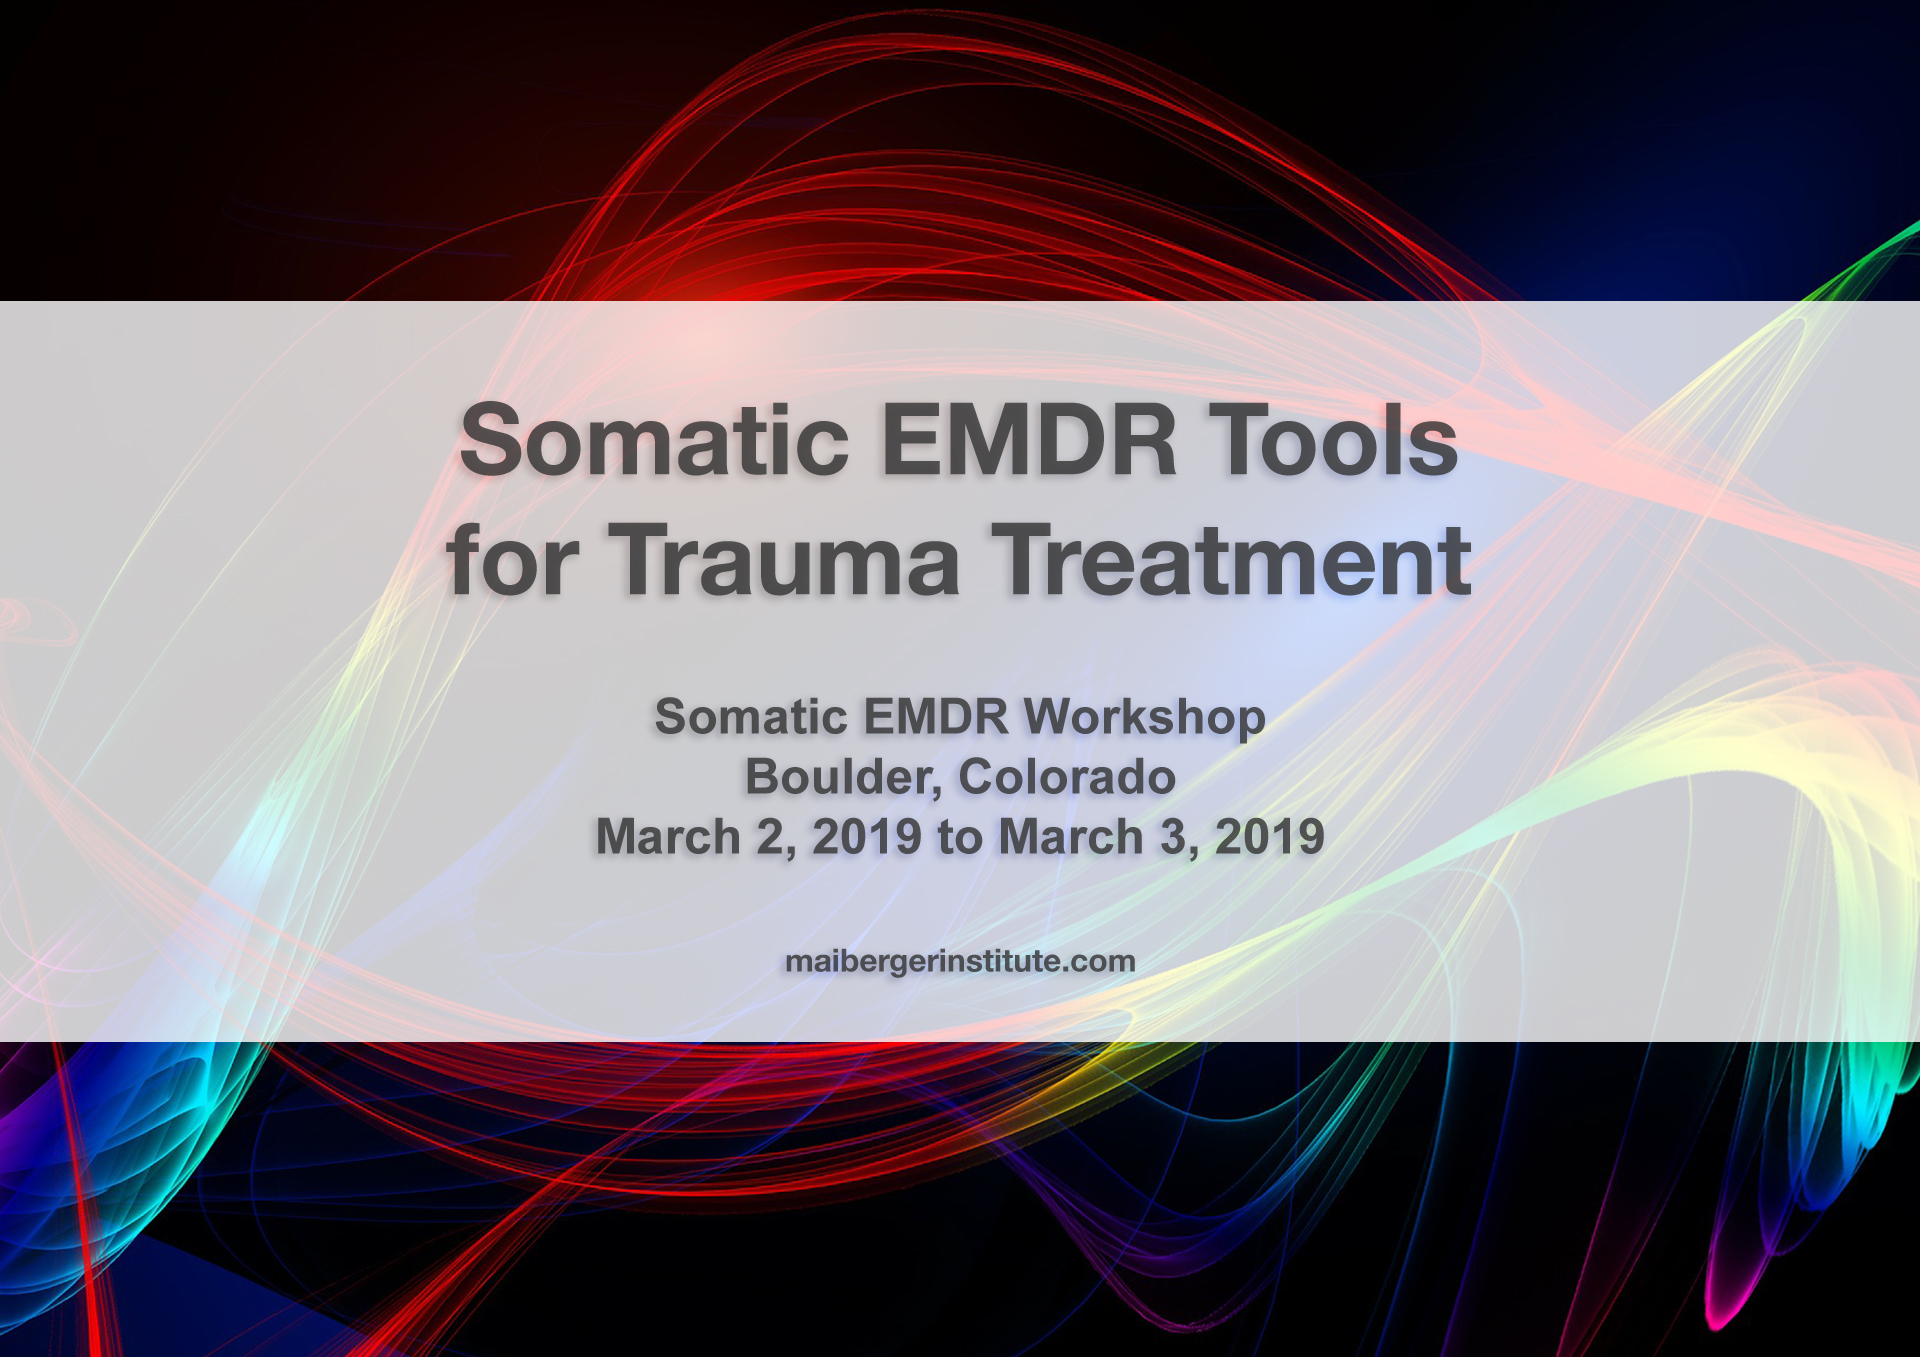 Somatic EMDR Tools for Trauma Treatment - Somatic EMDR Workshop in Boulder, Colorado - March 2, 2019 (Saturday) to March 3, 2019 (Sunday)